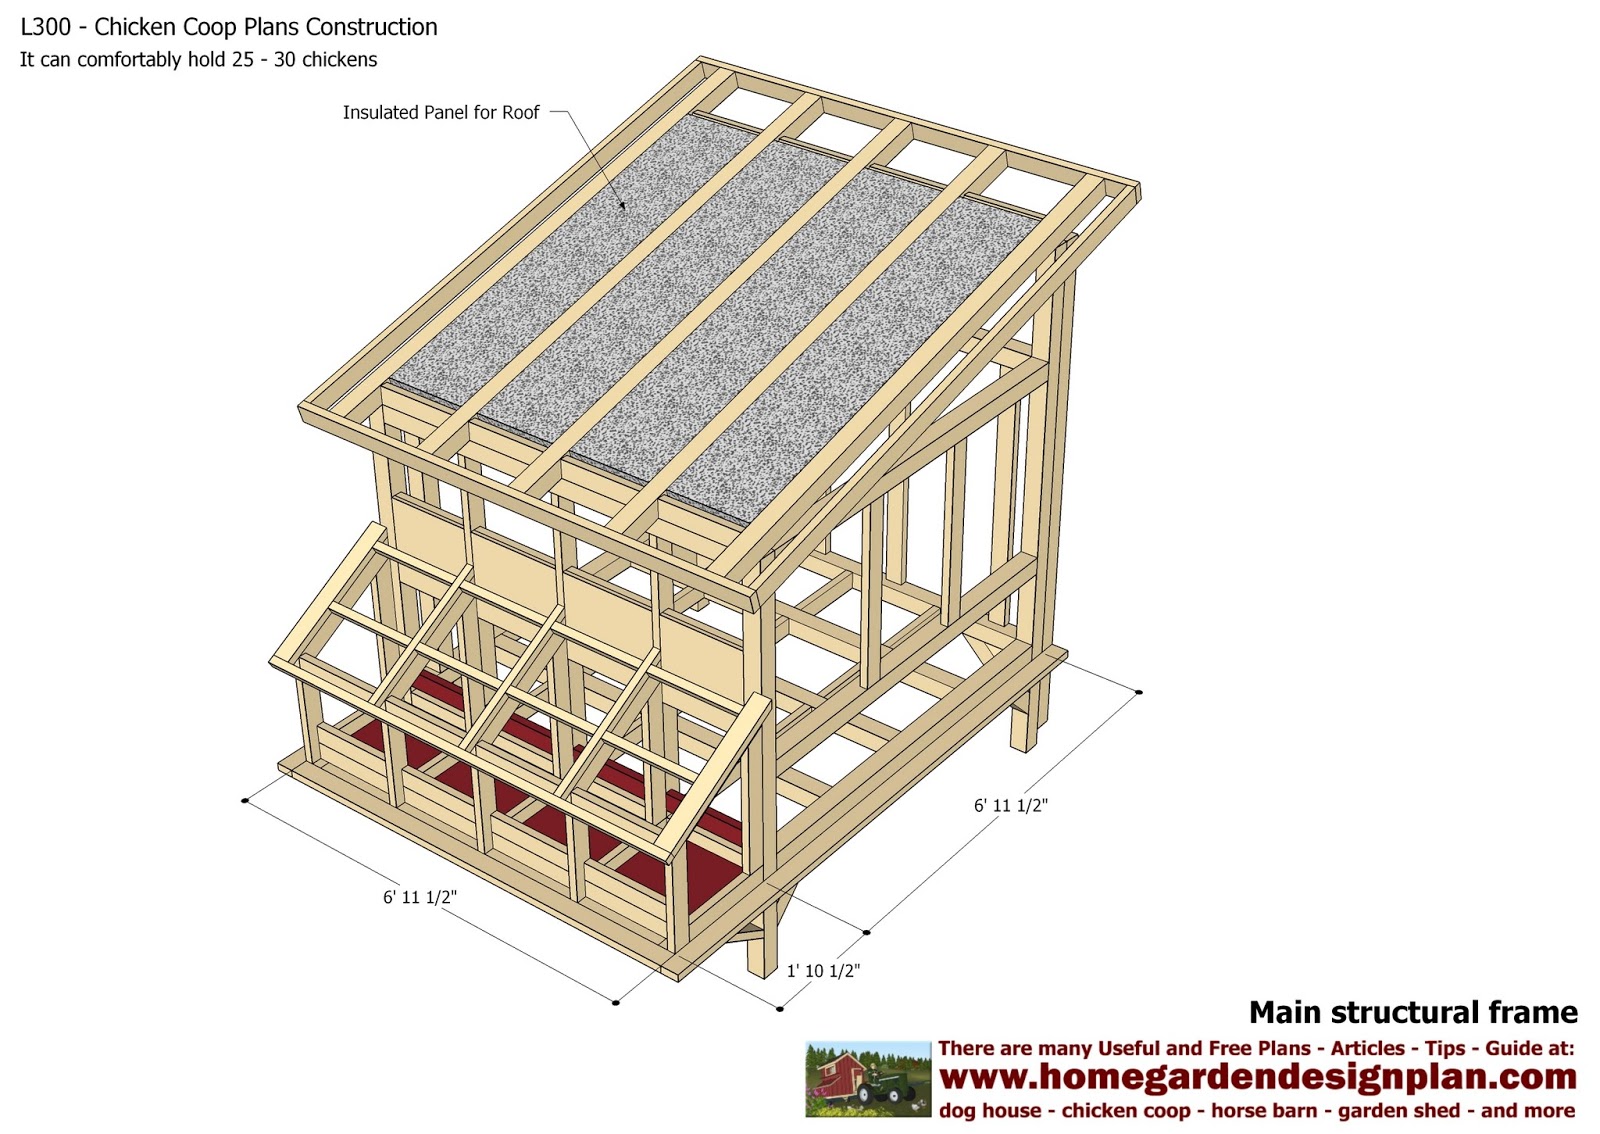 L300 - Chicken Coop Plans Construction - Chicken Coop Design - How To ...